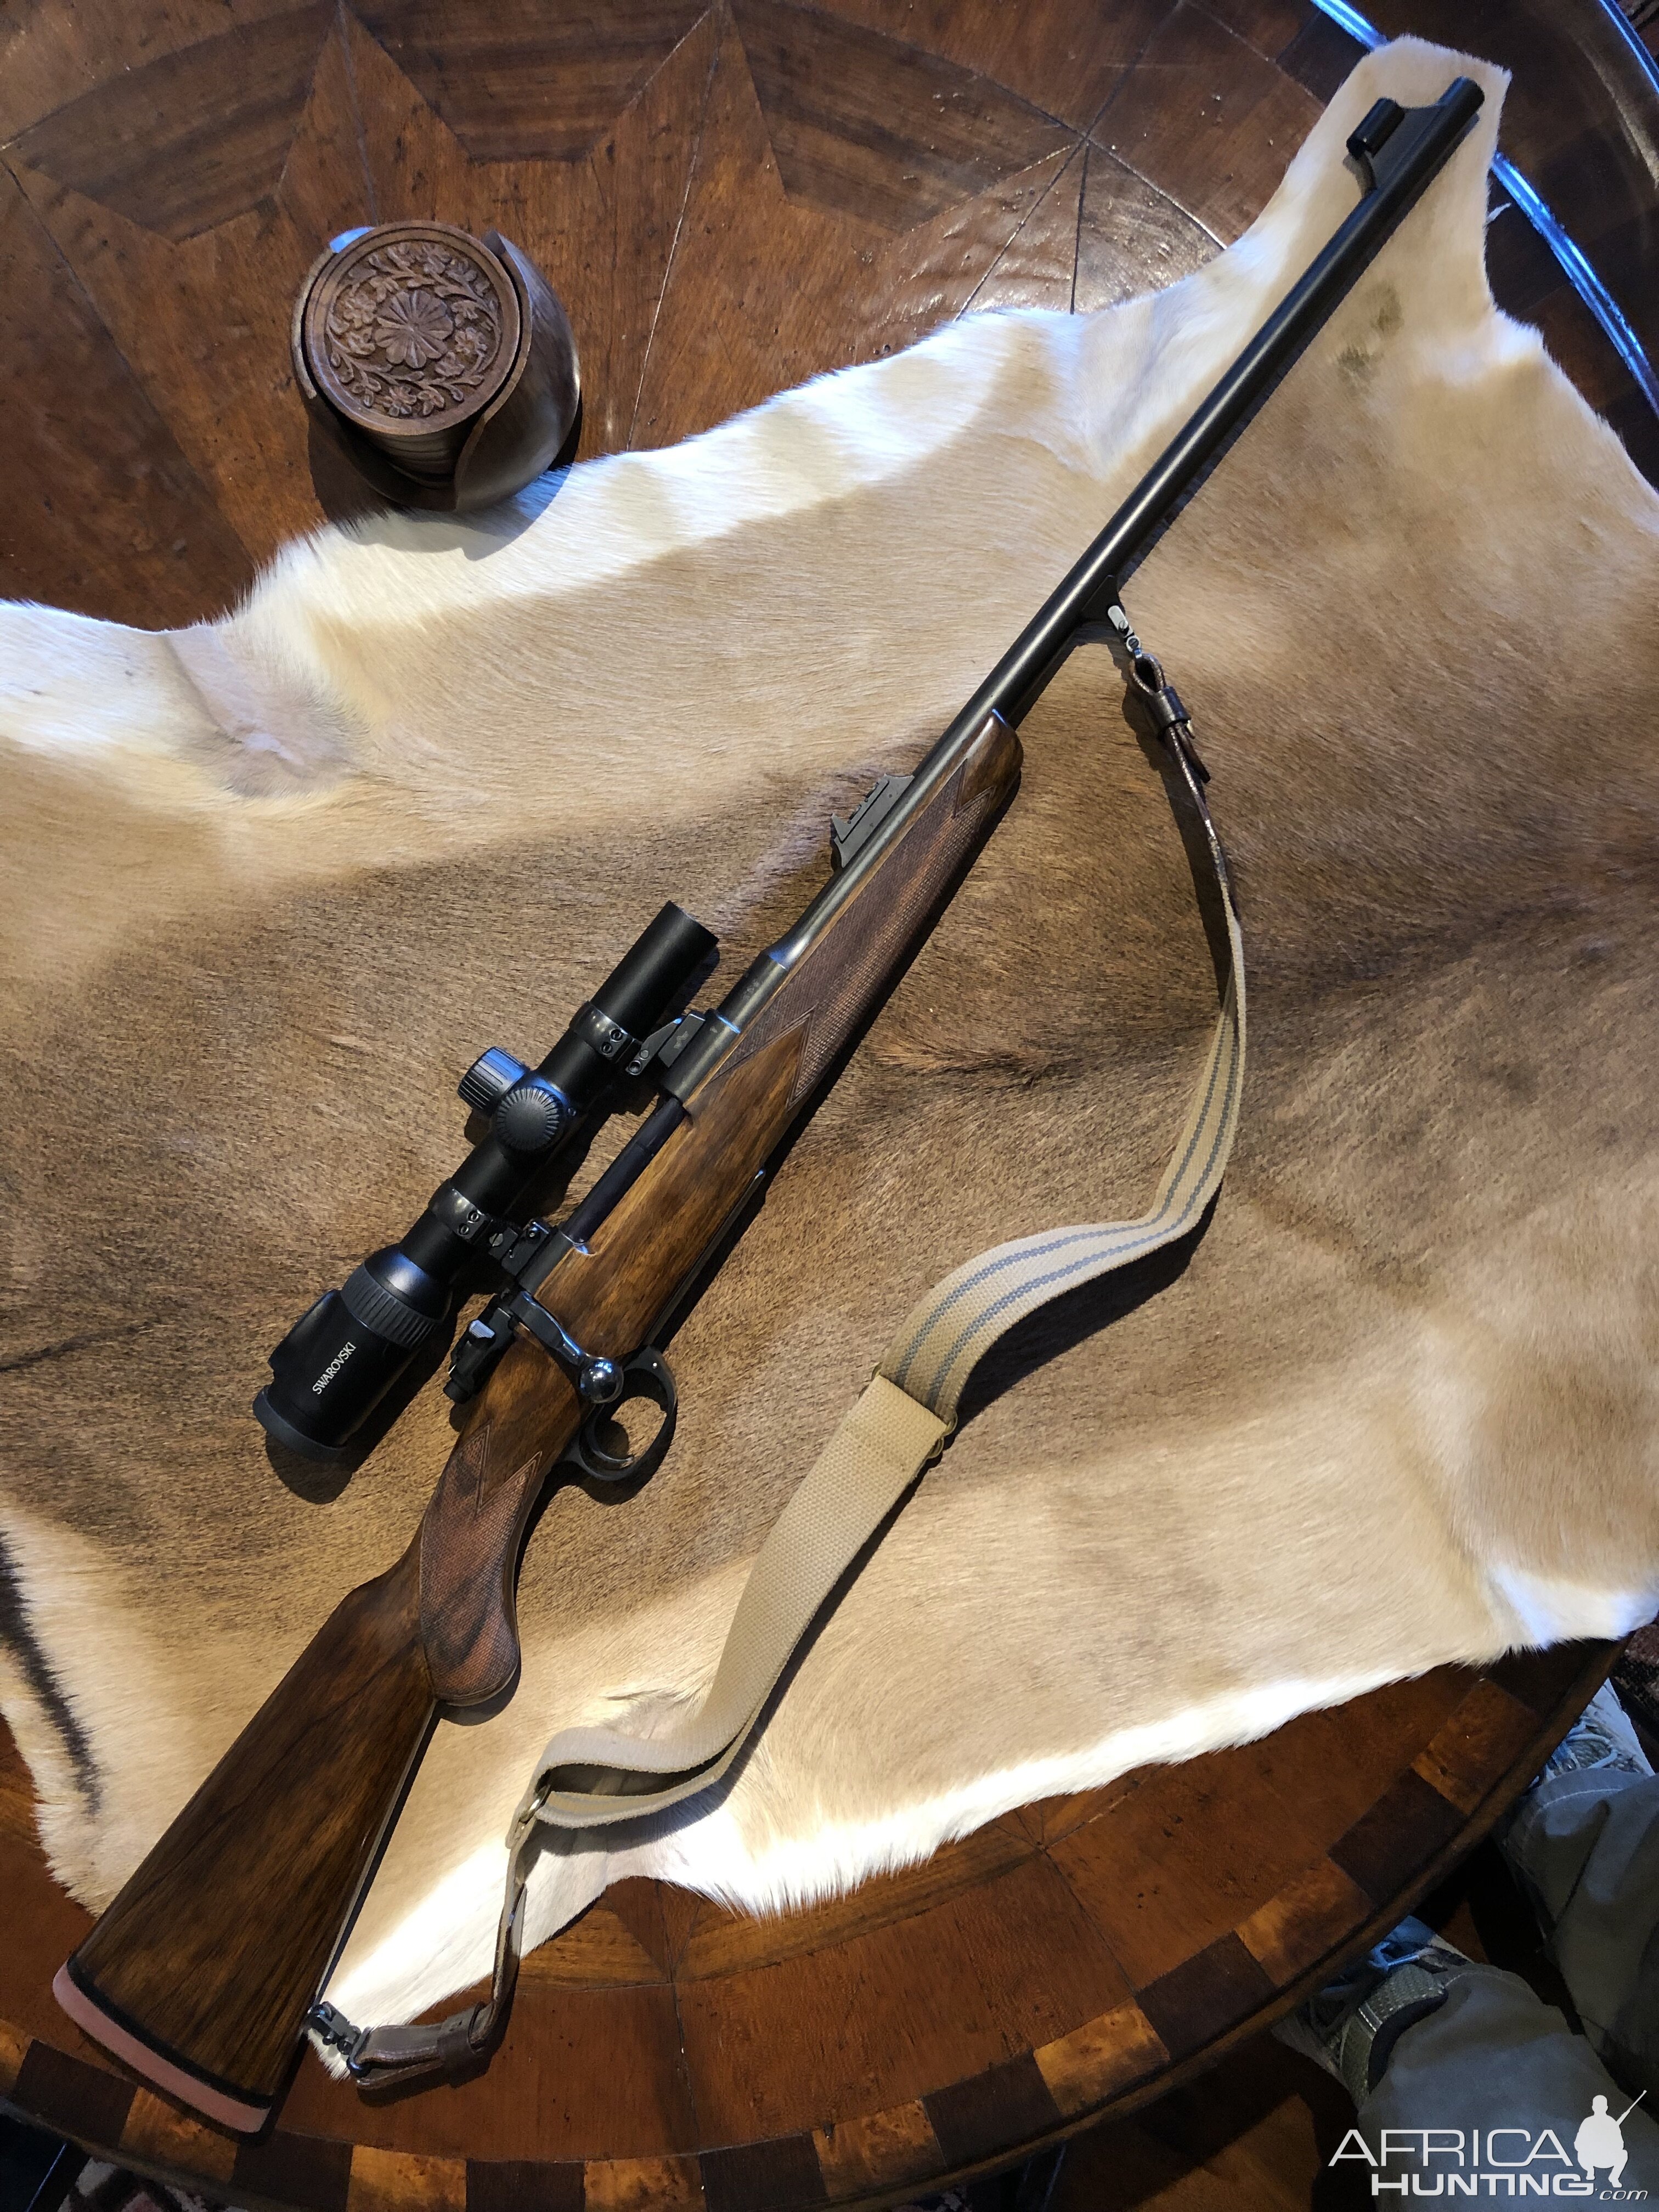 Rigby Highland Stalker in 9.3x62 with Swaro Z8 1-8x Riflescope on EAW apel mounts